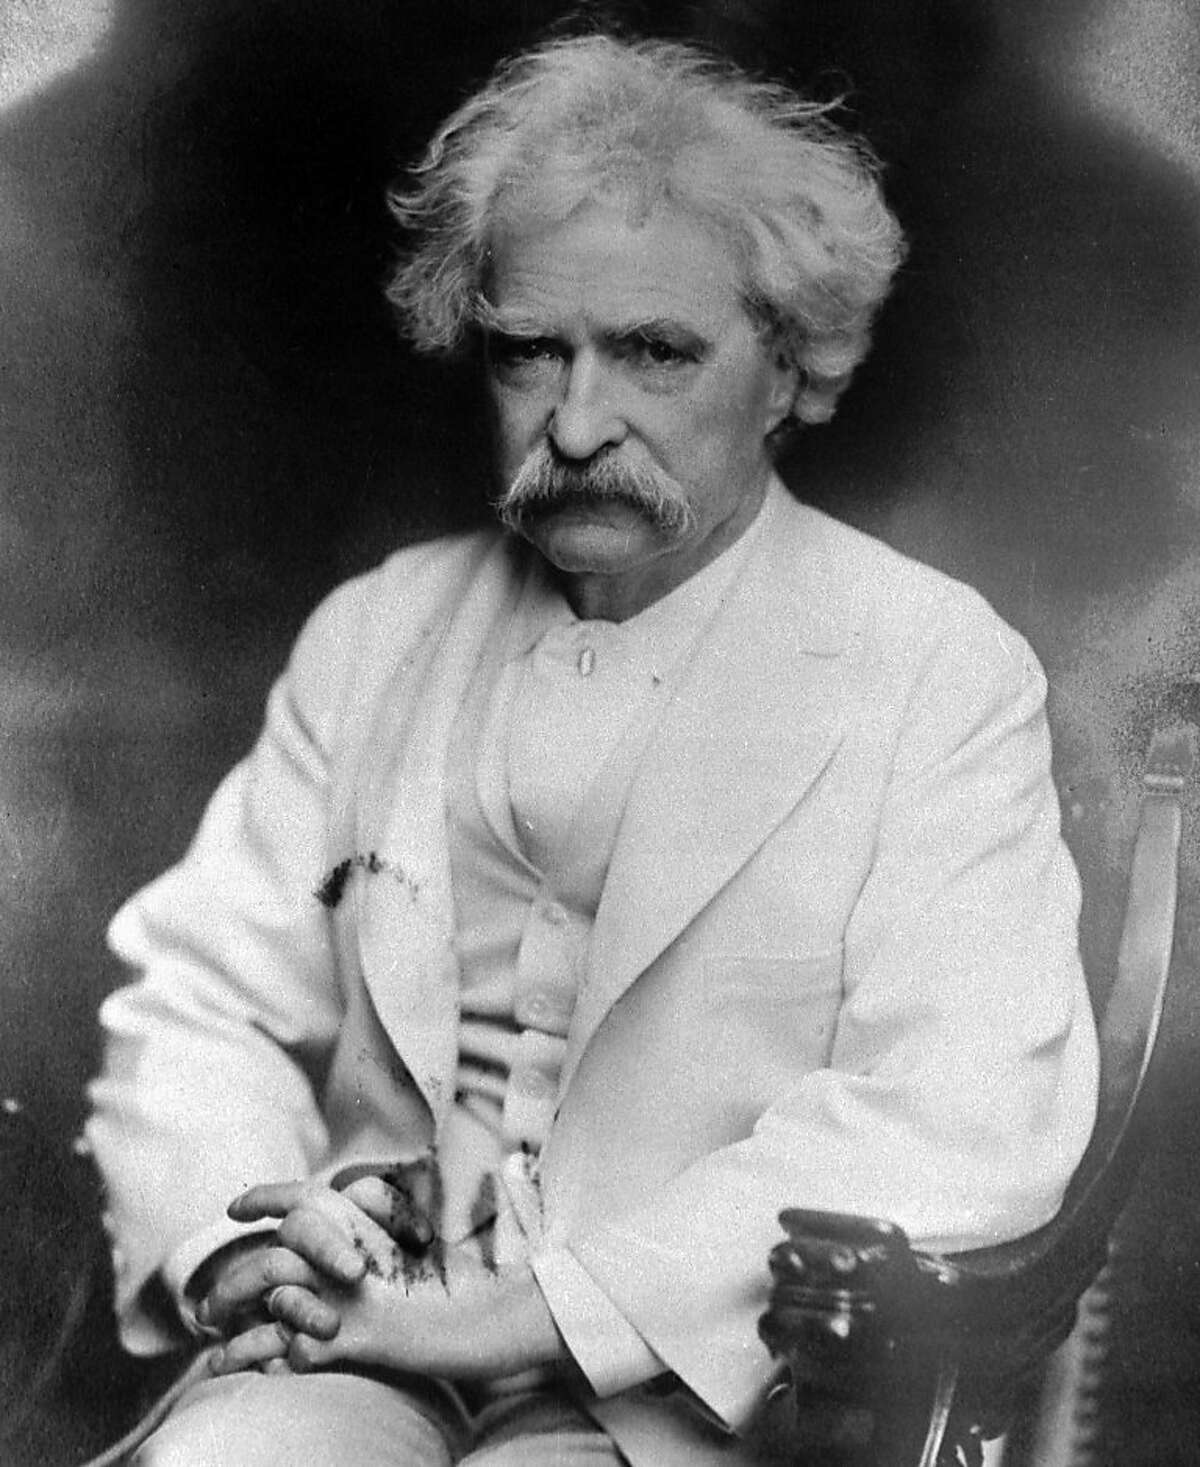 Author Samuel Longhorne Clemens, better known under his pen name, Mark Twain